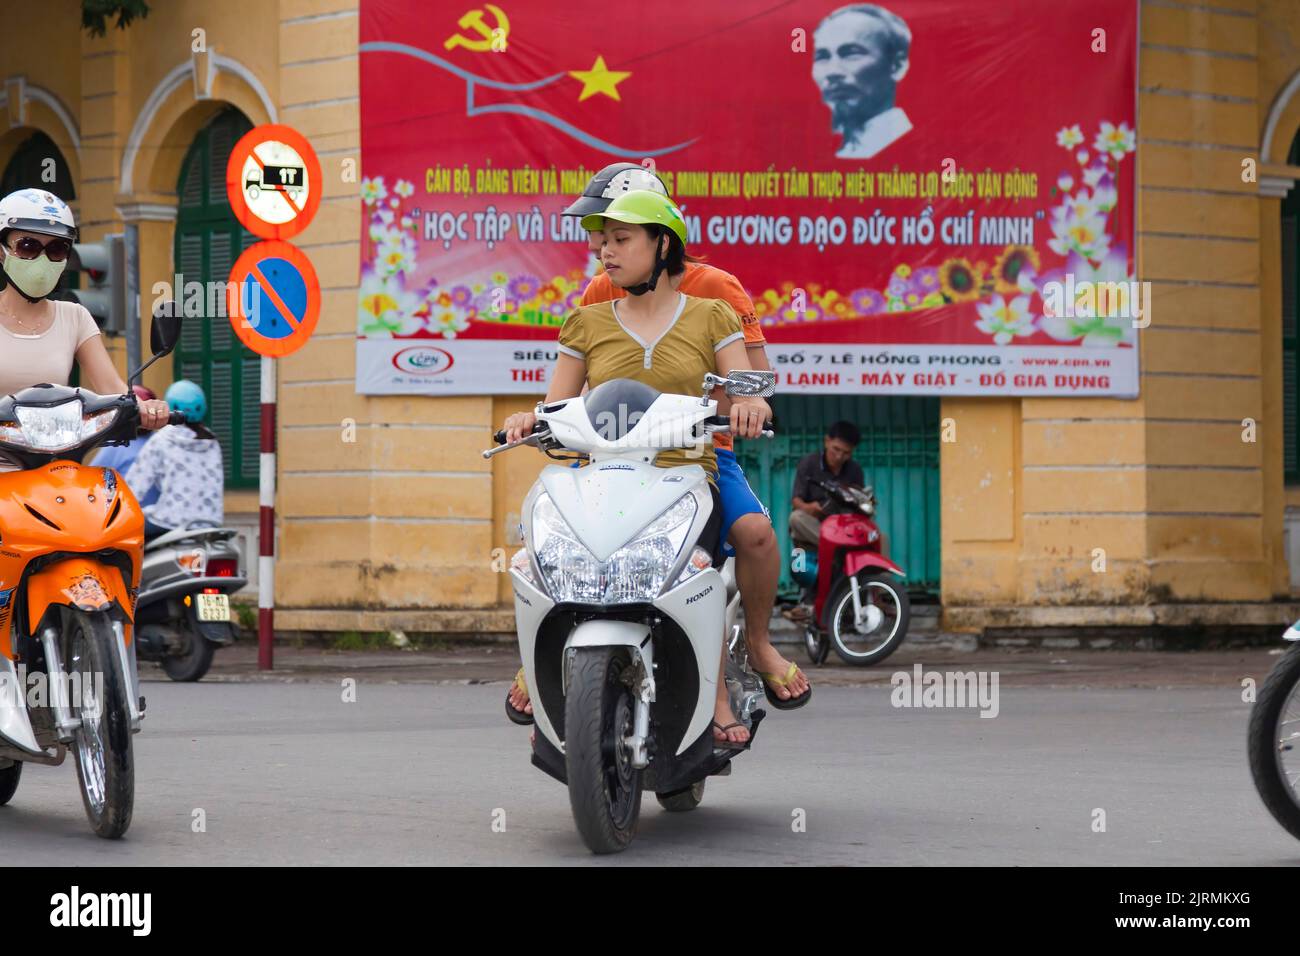 Vietnamese girls on motorcycles in front of Ho Chi Minh propaganda poster, Hai Phong, Vietnam Stock Photo